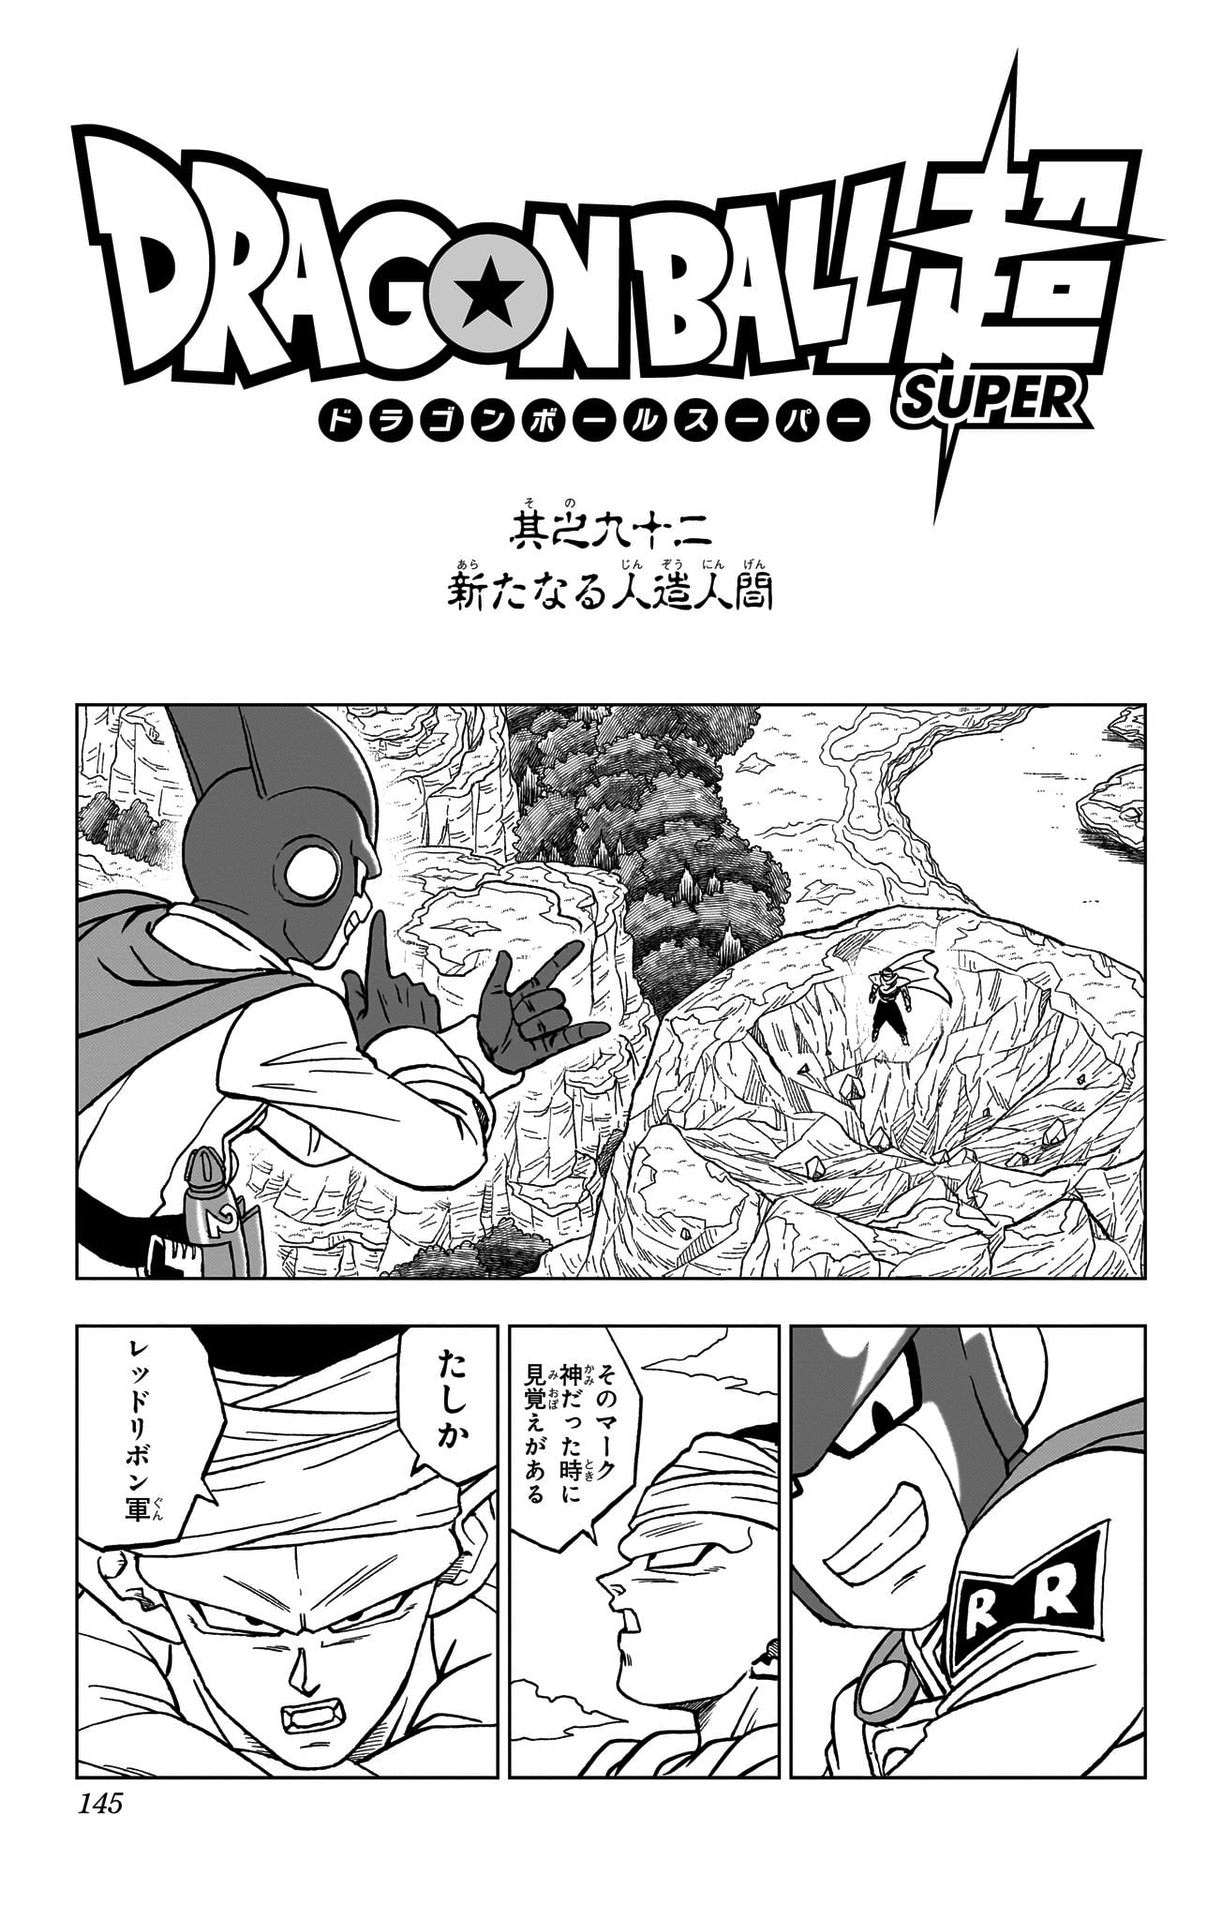 Dragon Ball Super Releases New Super Hero Manga Chapter